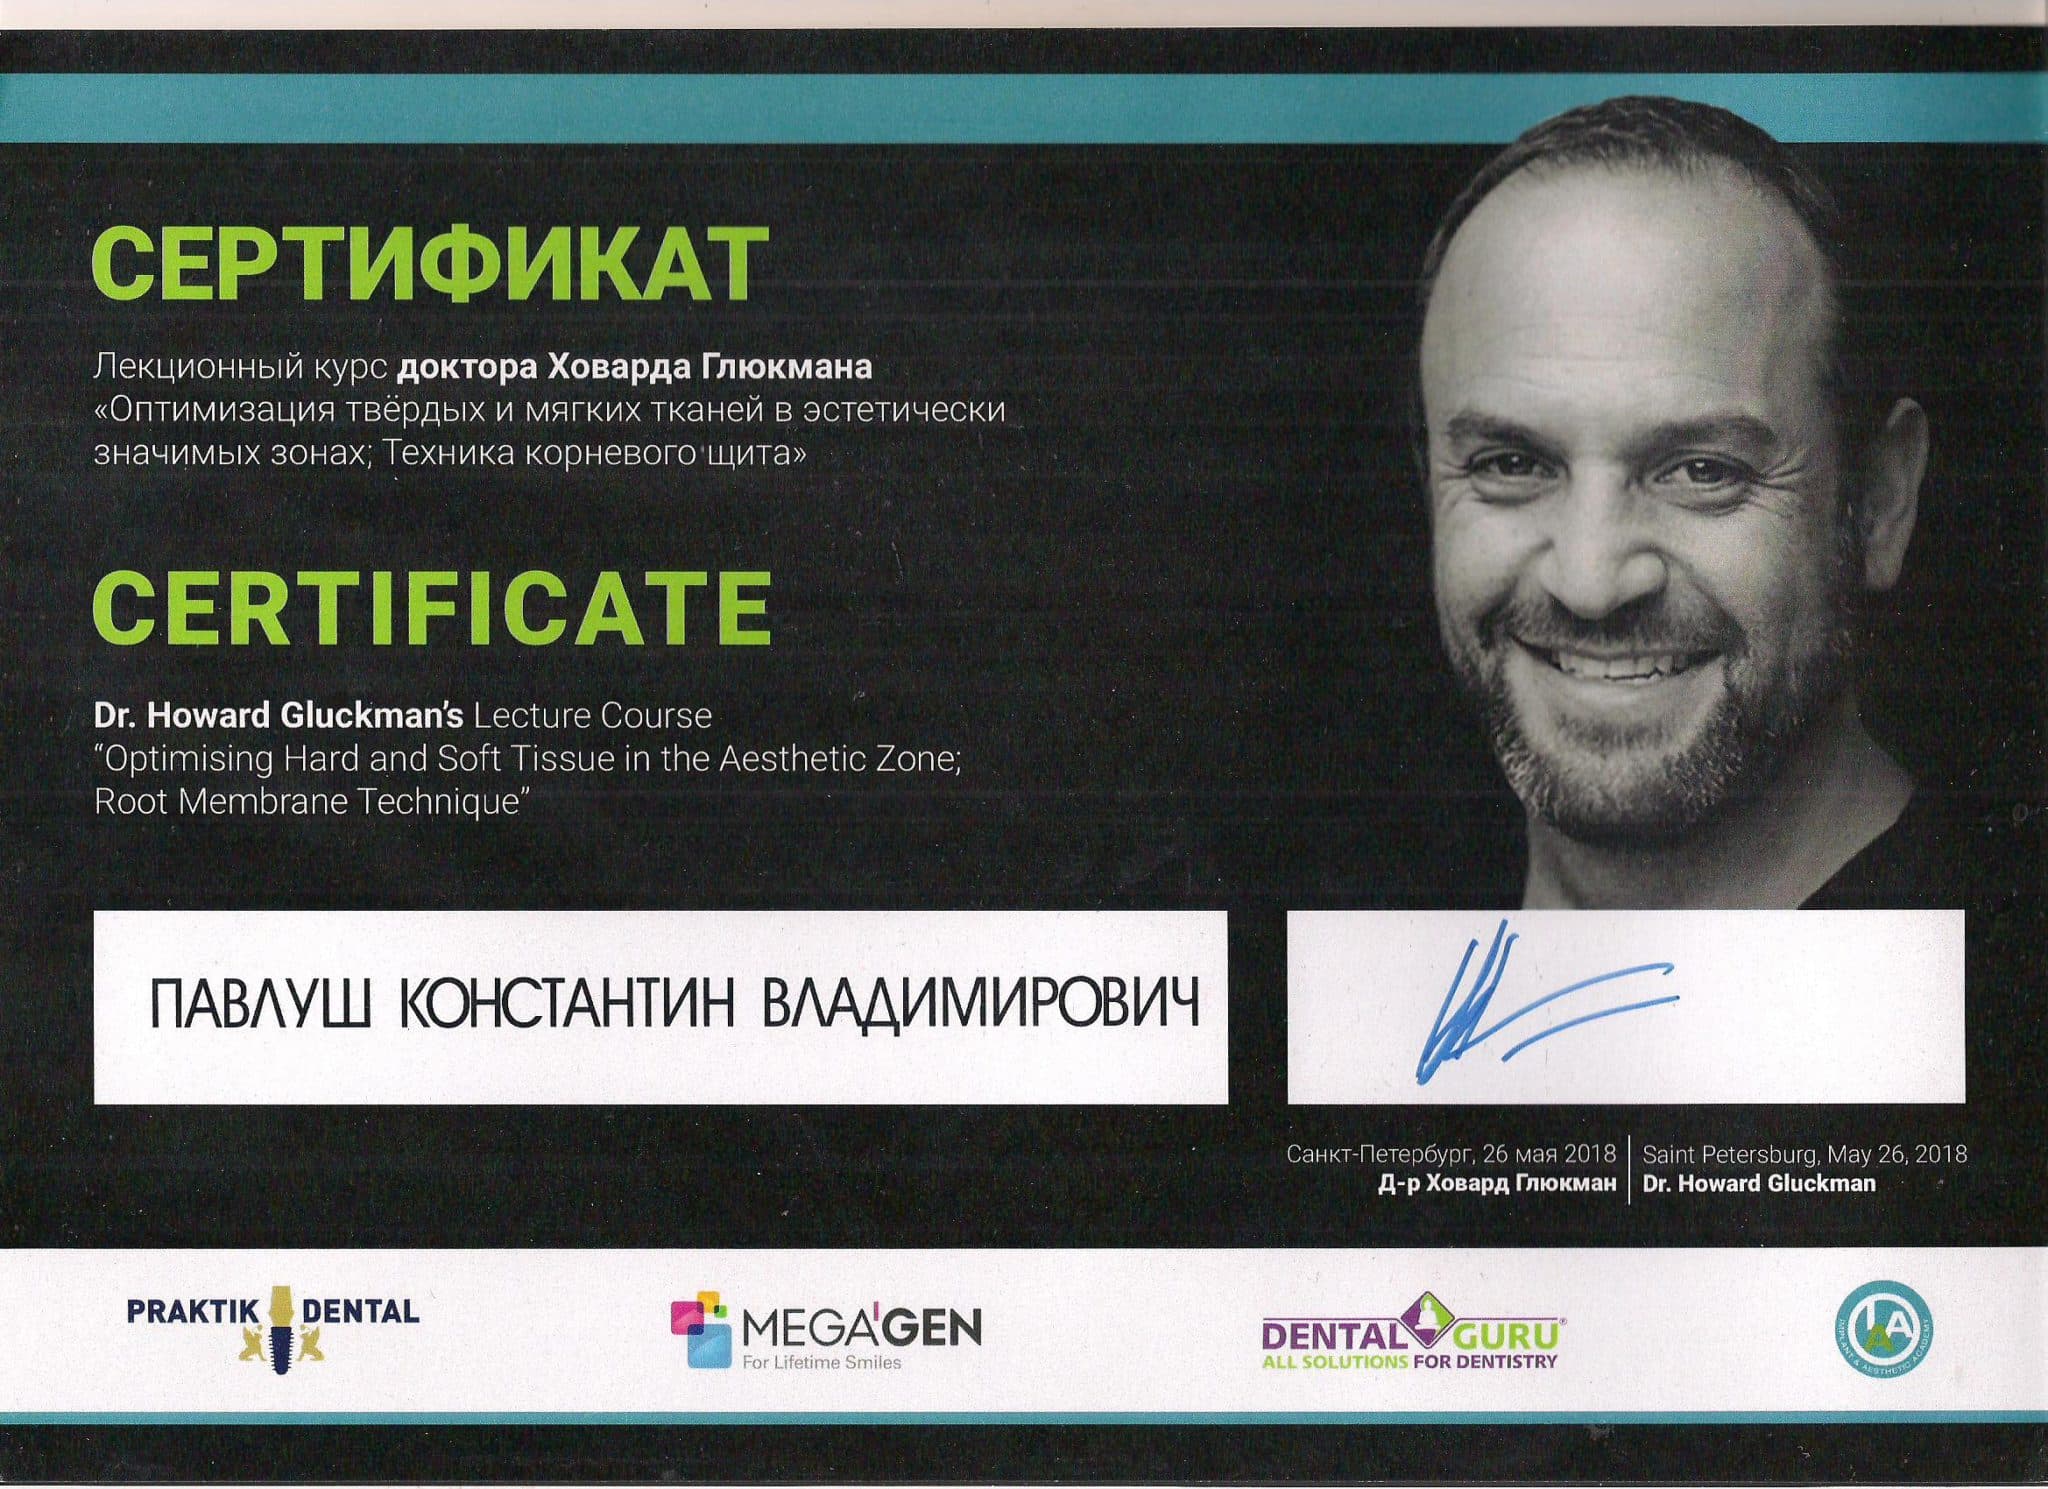 Сертификат доктора Ховарда Глюкмана